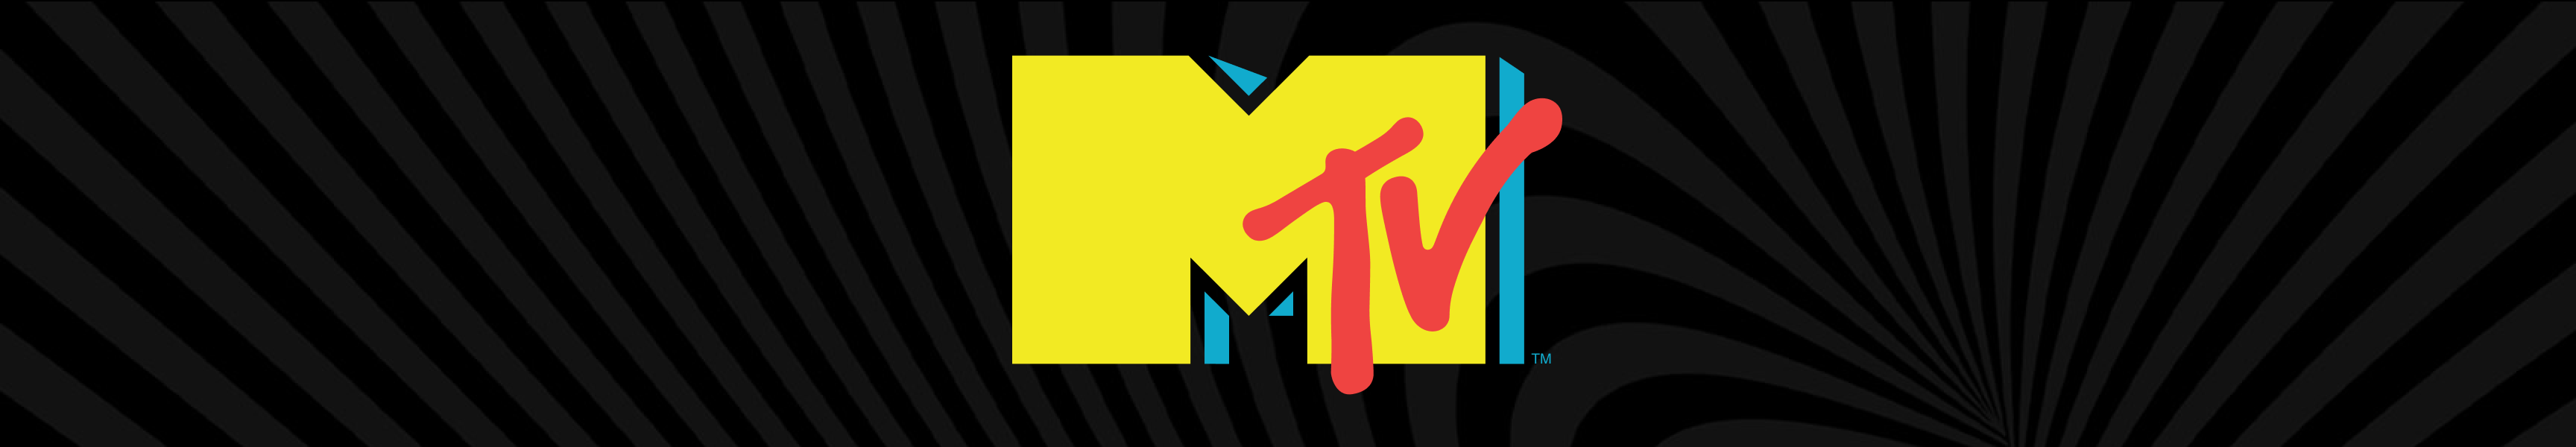 Verrerie MTV